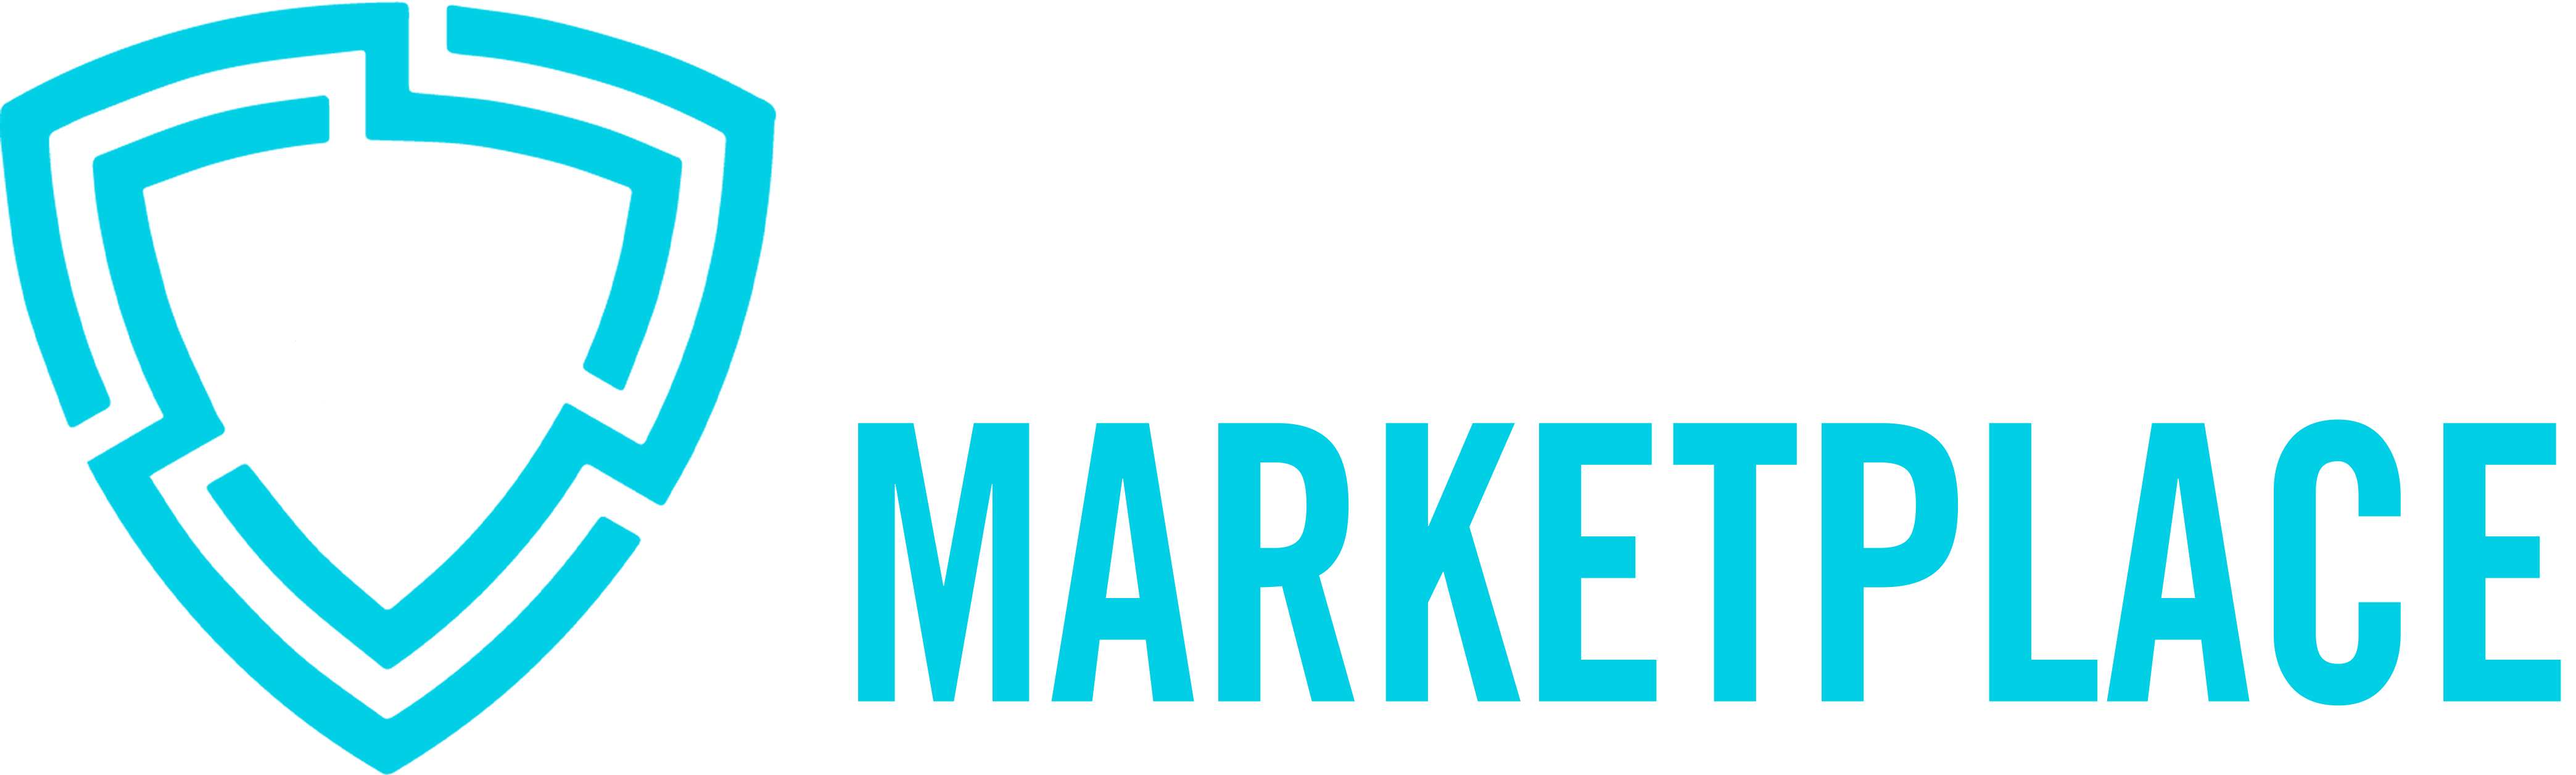 Cyber Privacy Market